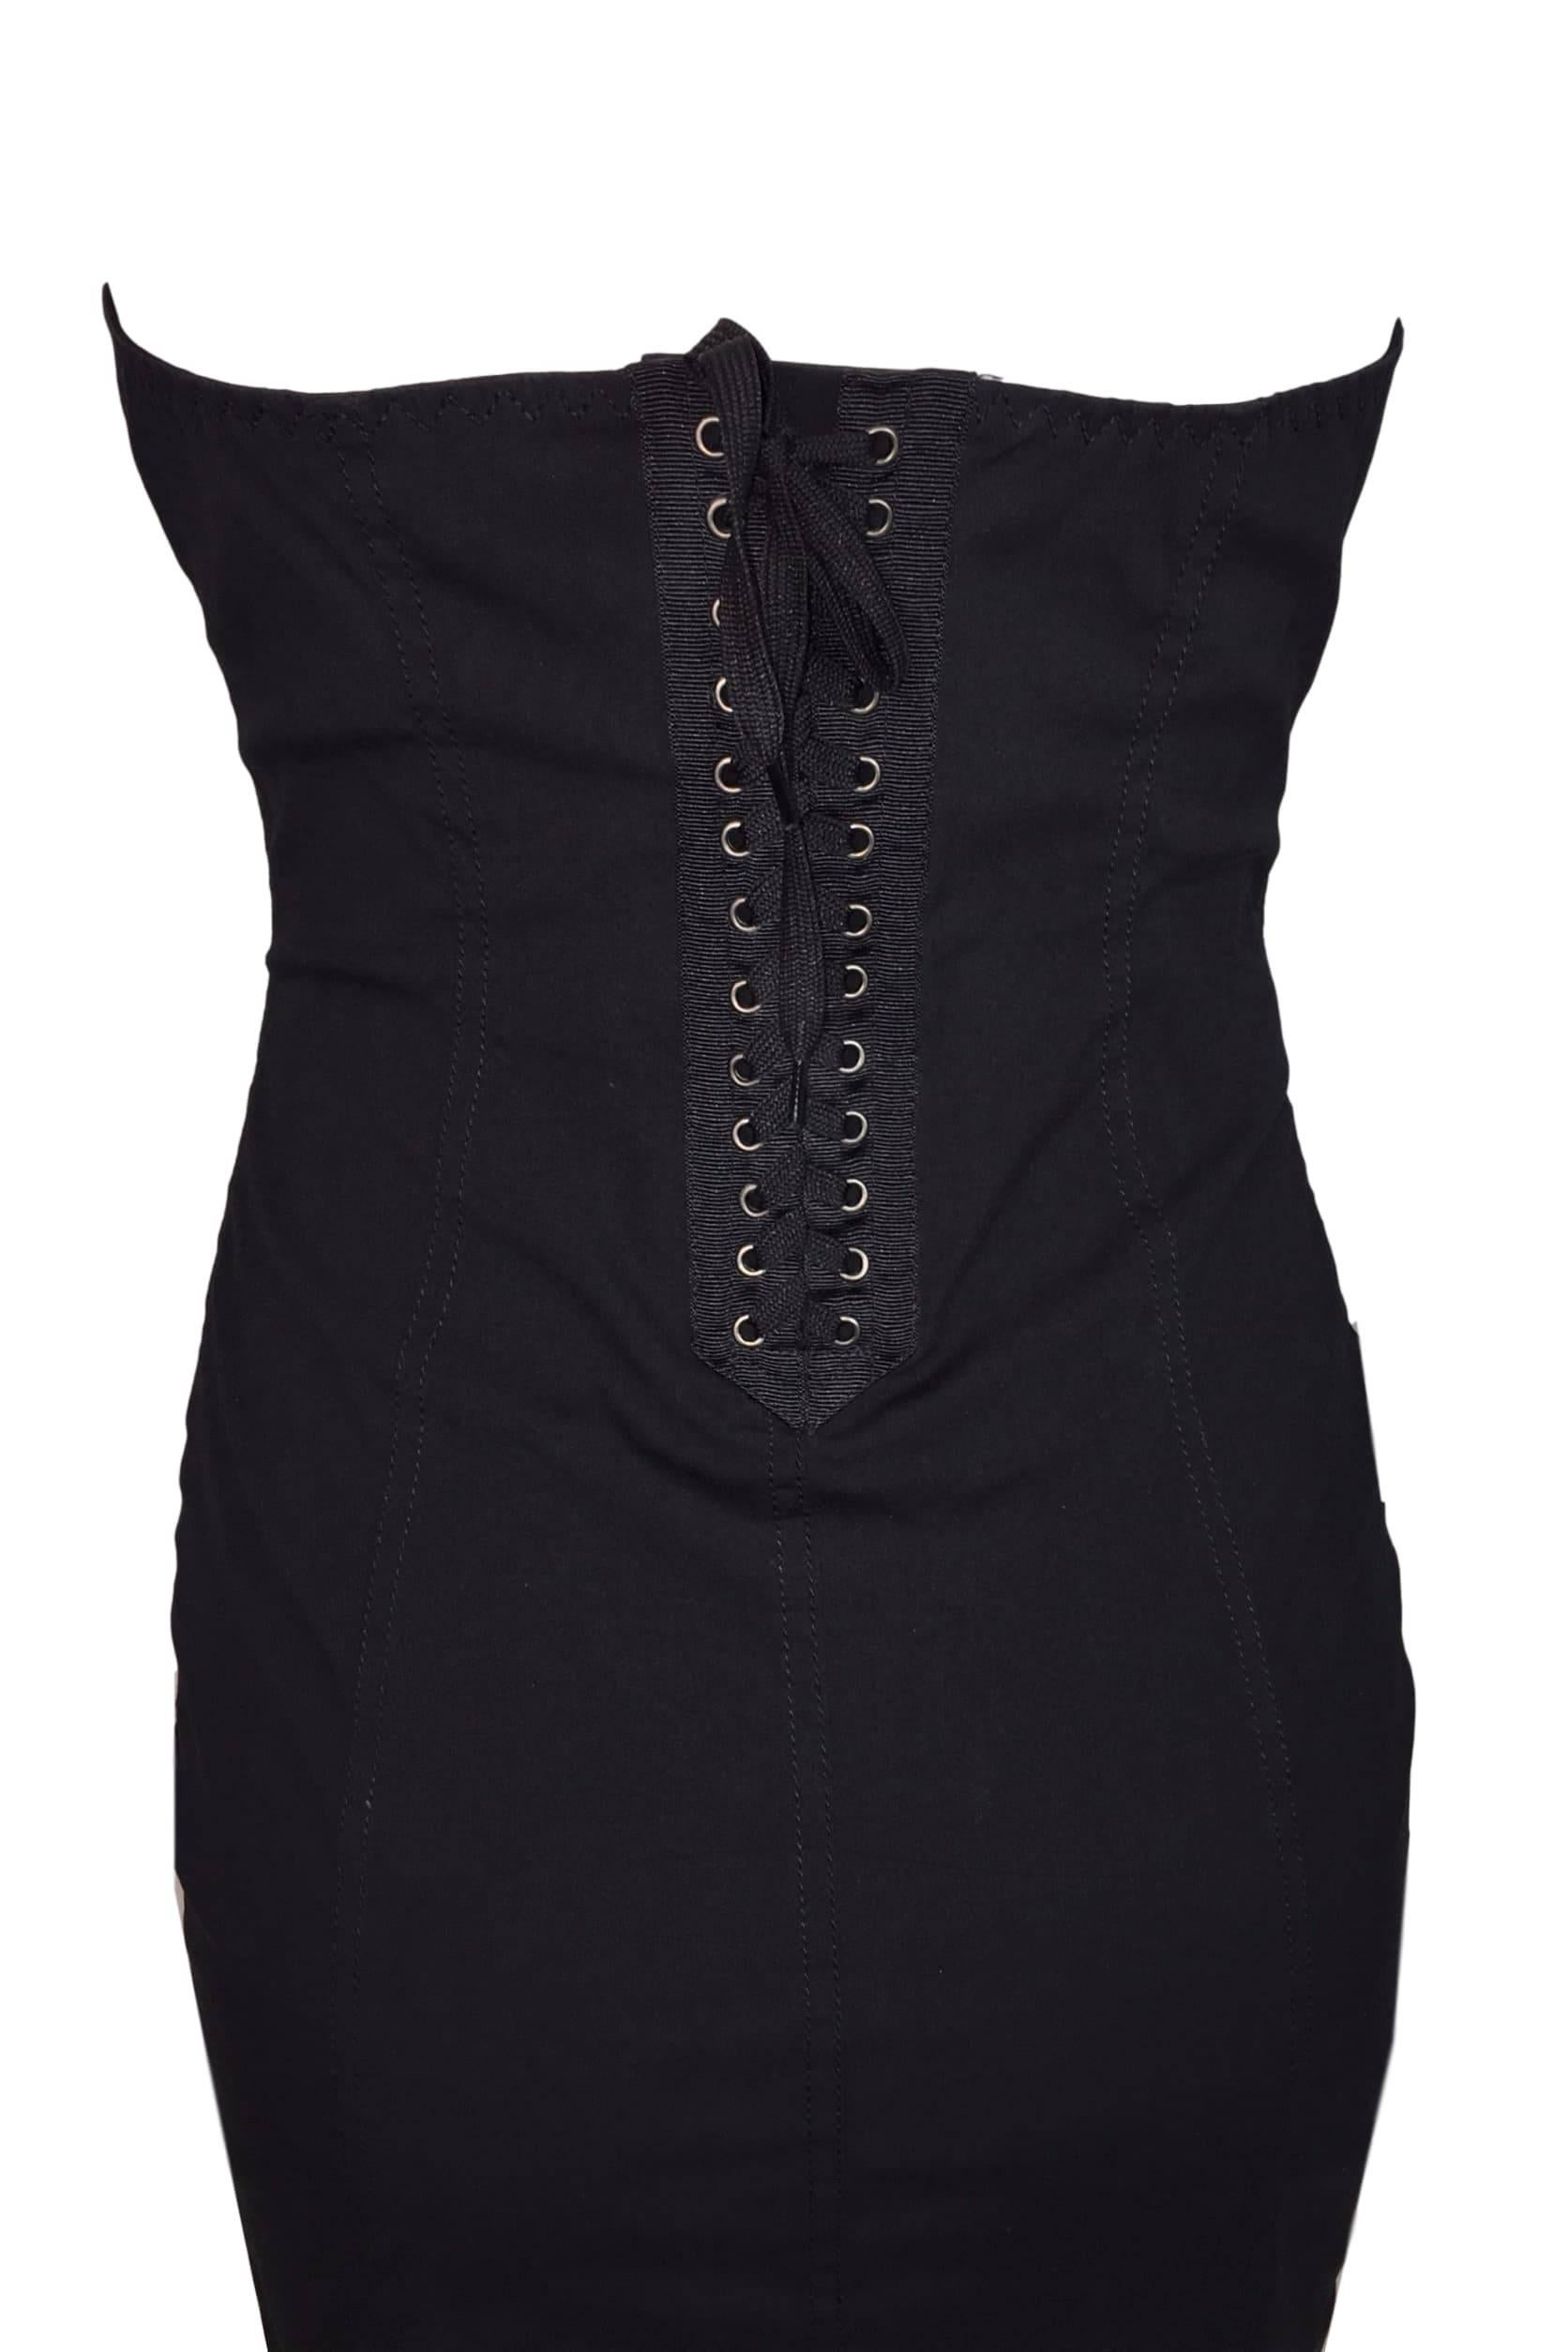 1987 Jean Paul Gaultier FIT Museum Black Mesh Corset Zipper Wiggle Dress 1